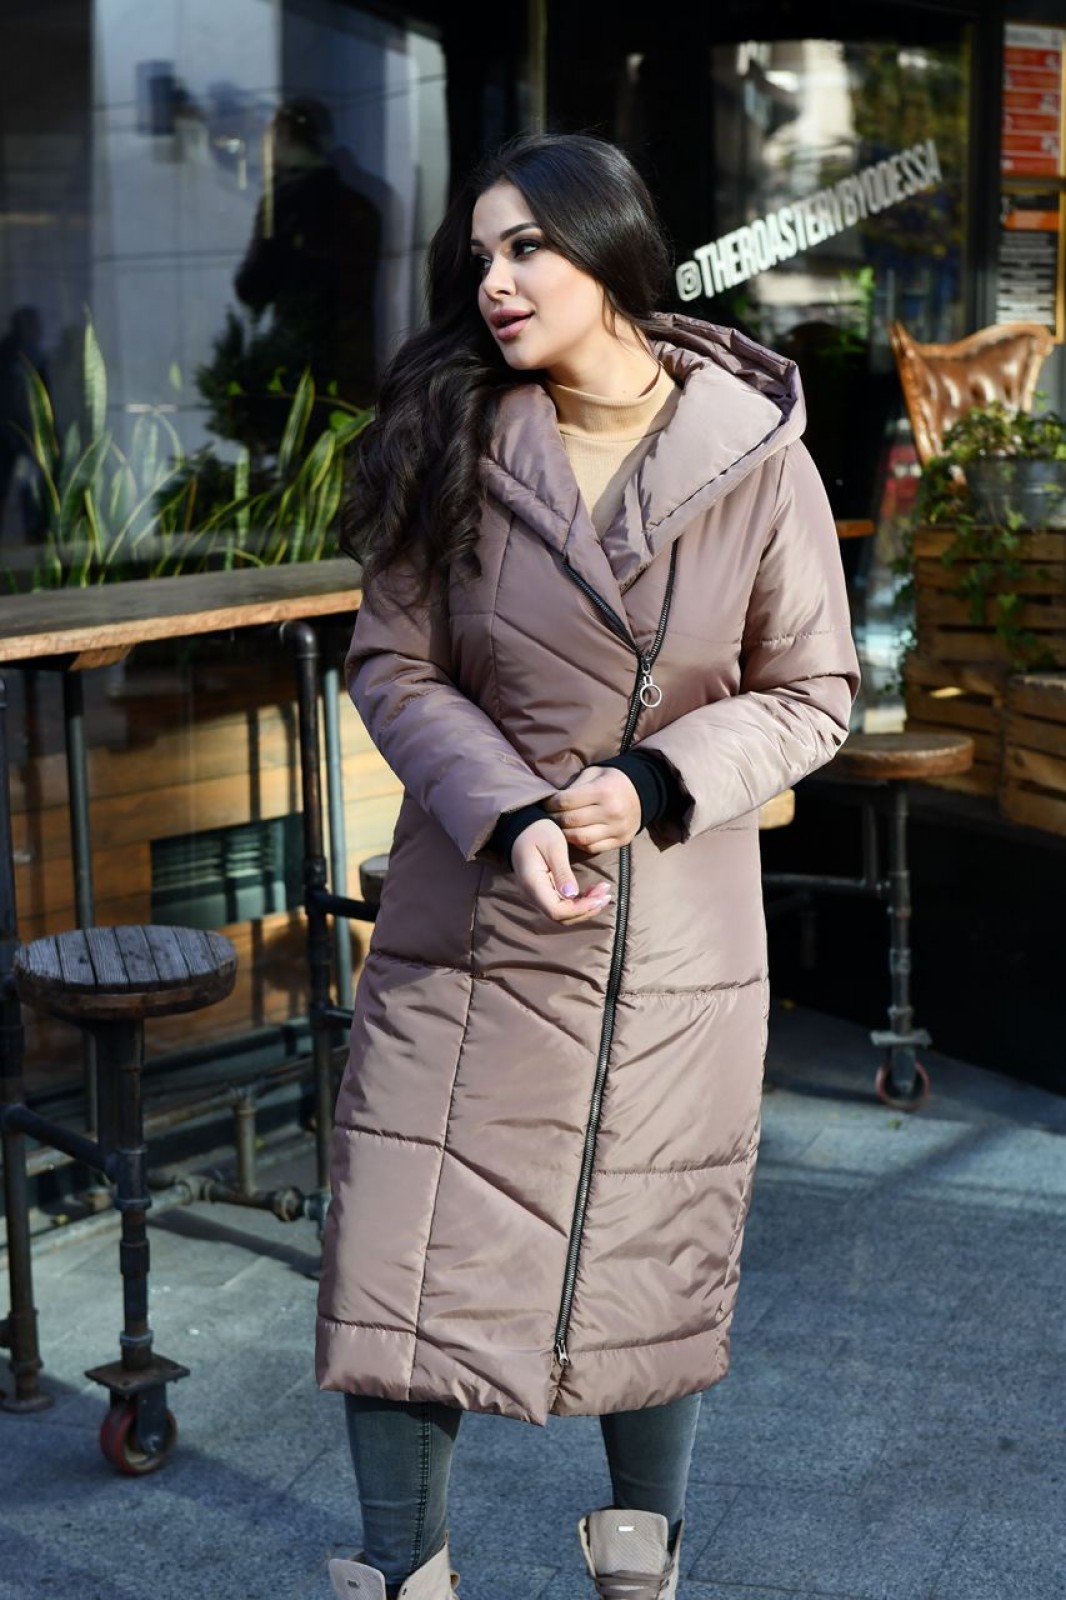 Жіноче плащове пальто шоколадного кольору 384155